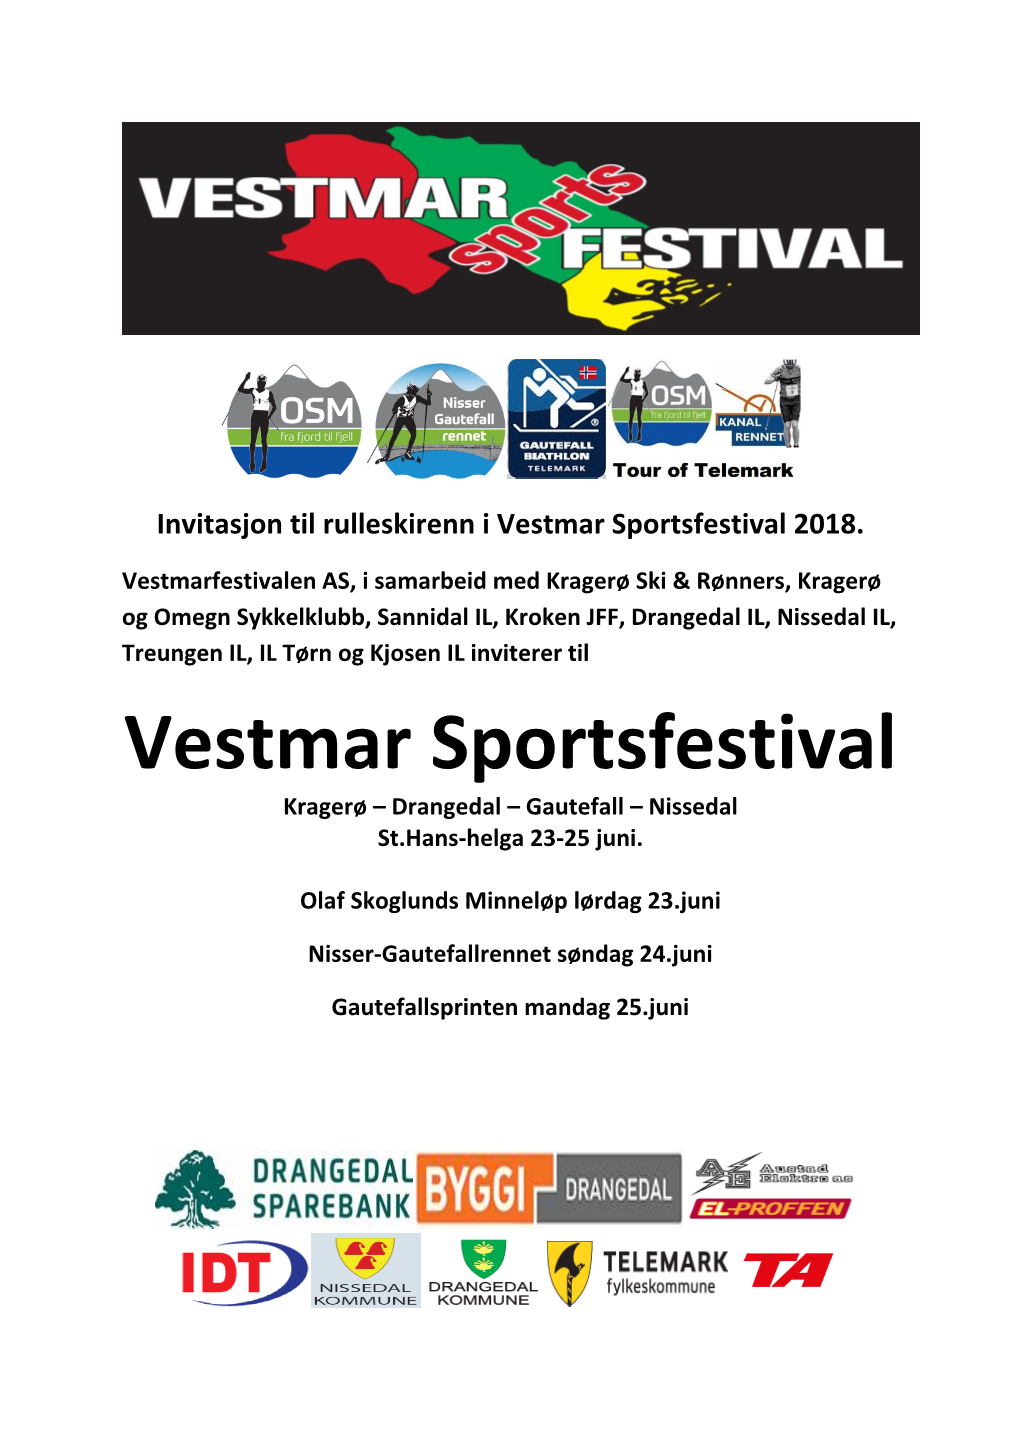 Vestmar Sportsfestival 2018